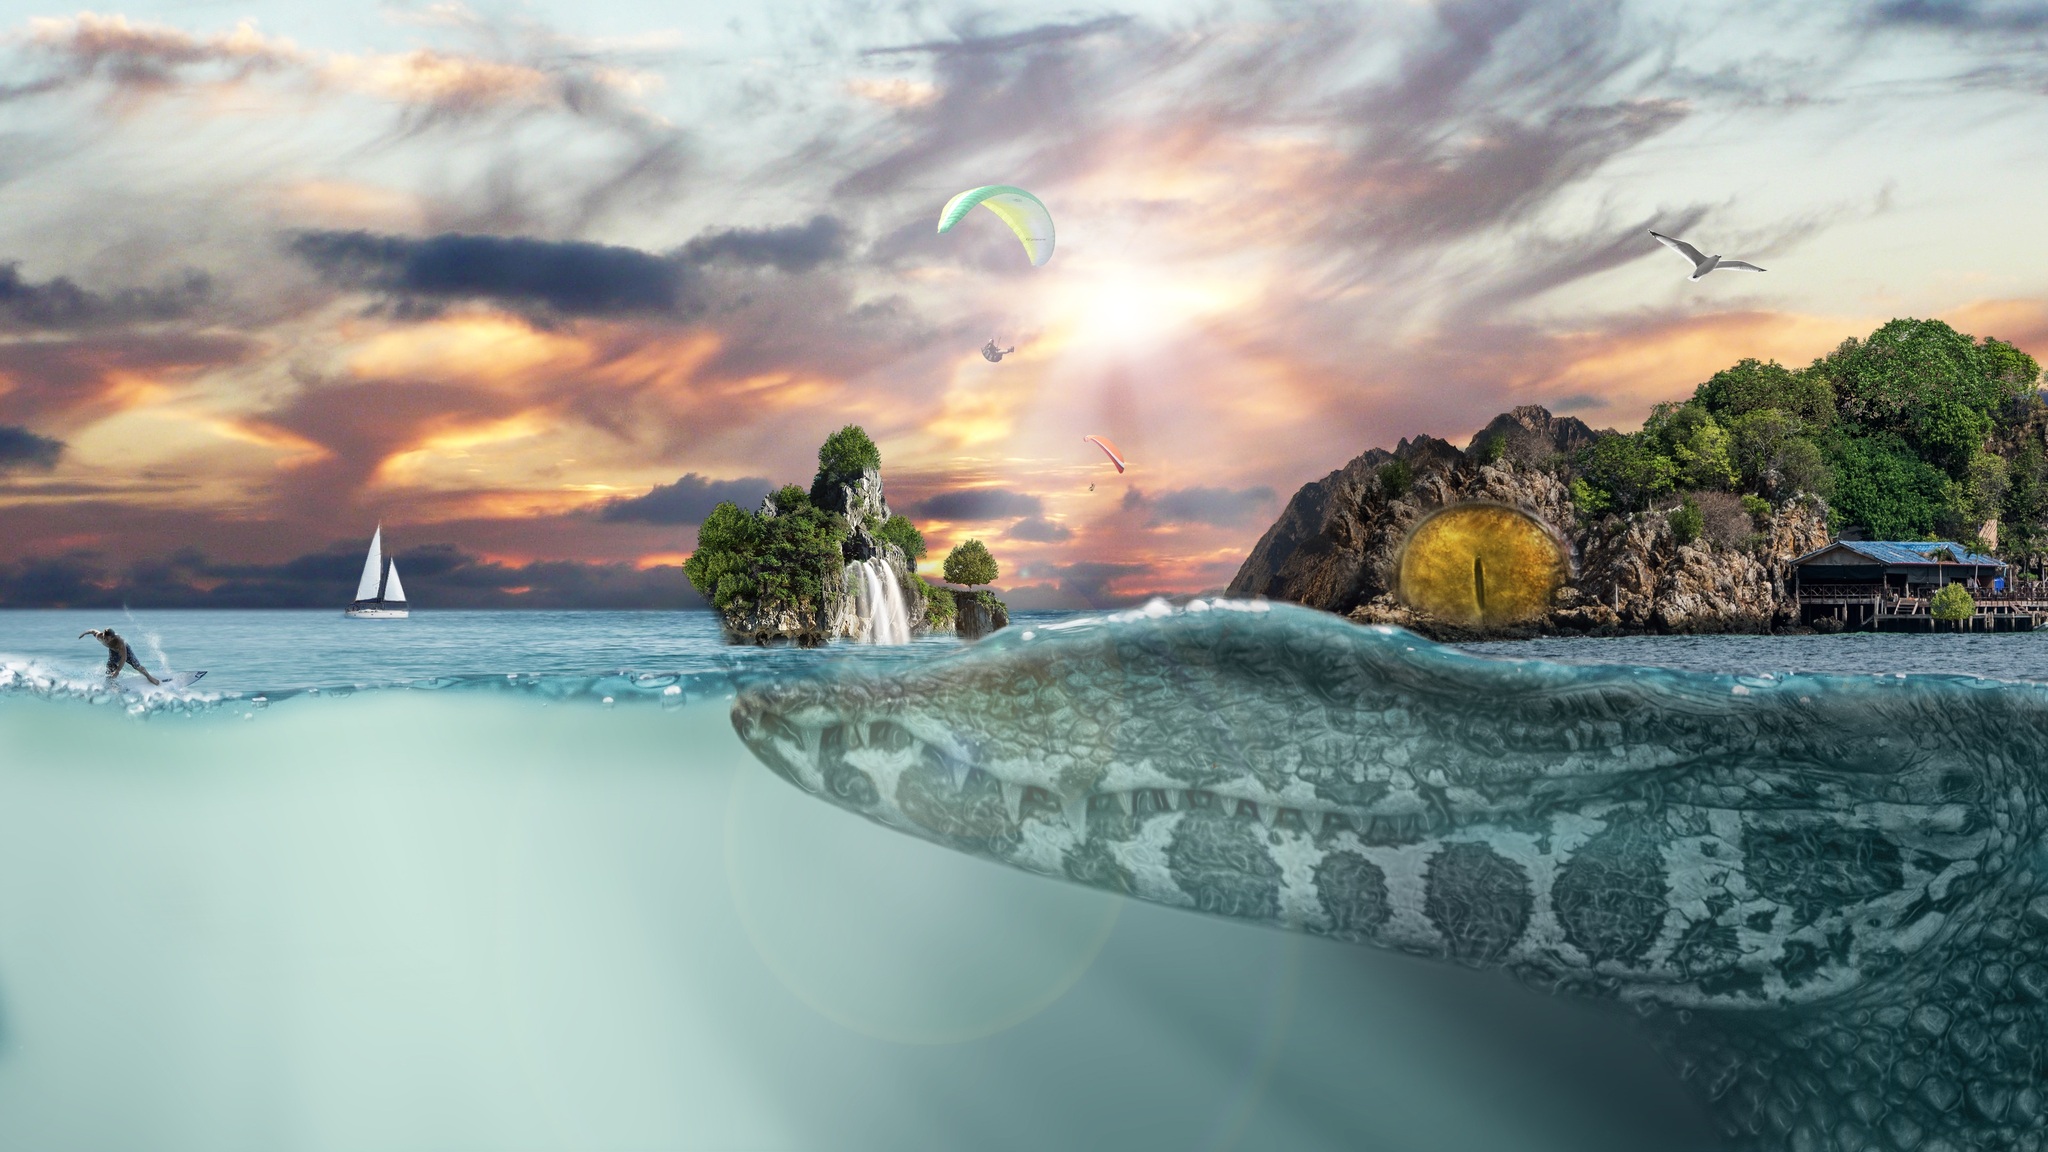 sea-island-fantasy-hd.jpg